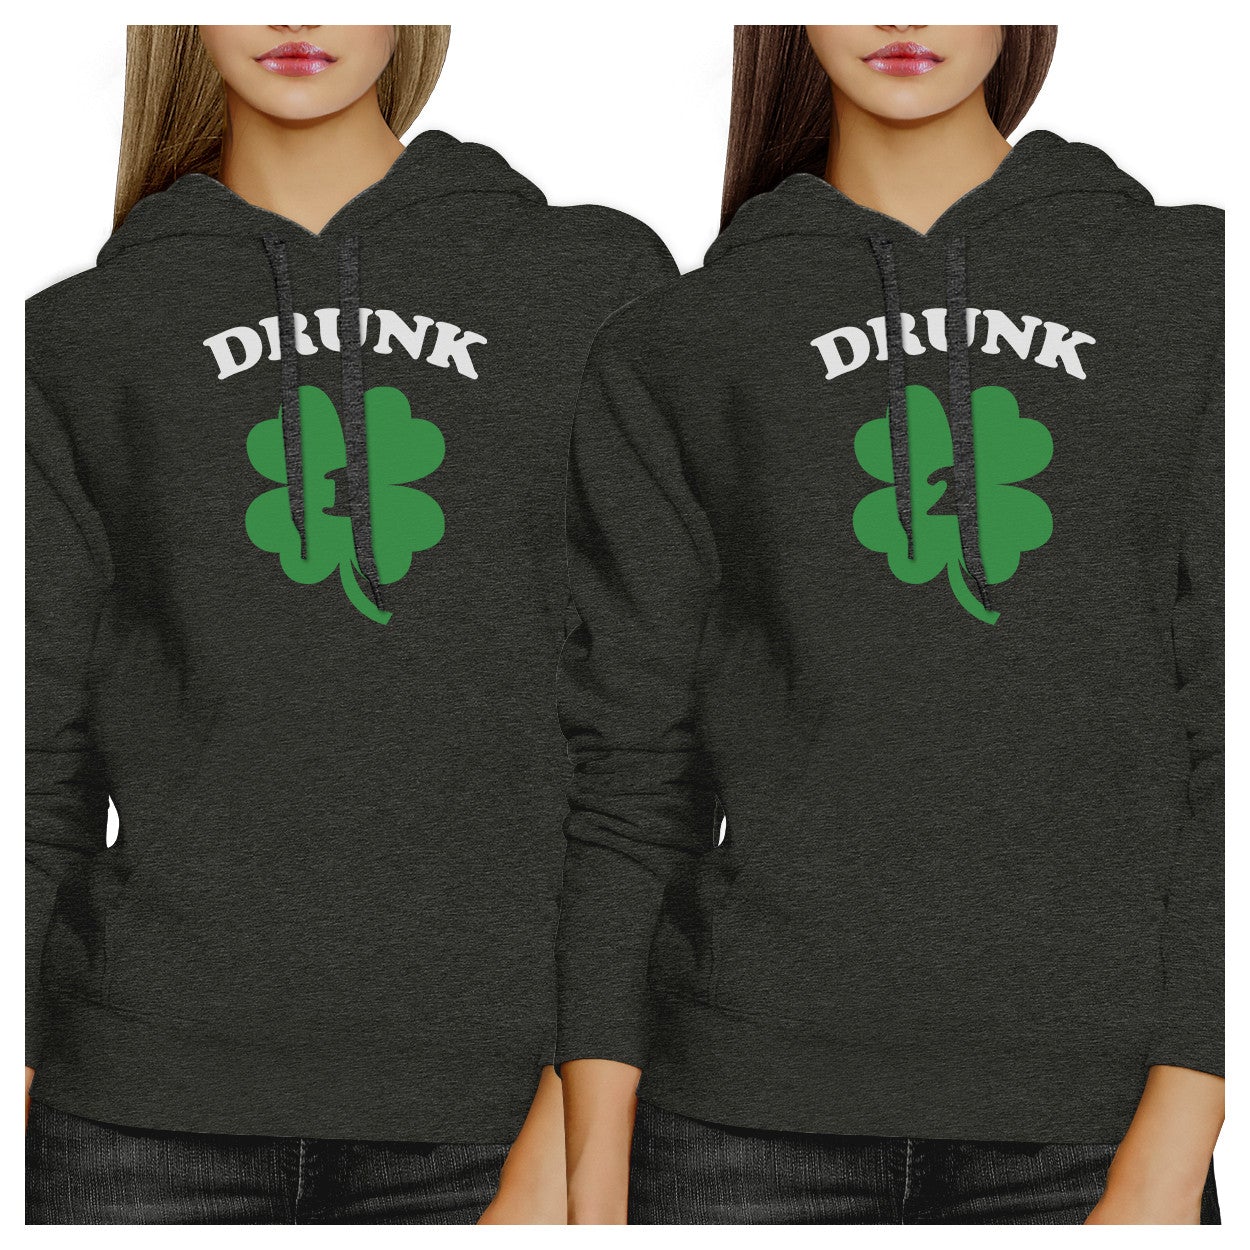 Drunk1 Drunk2 Best Friend Matching Hoodies Gift For St Patricks Day - 365 In Love